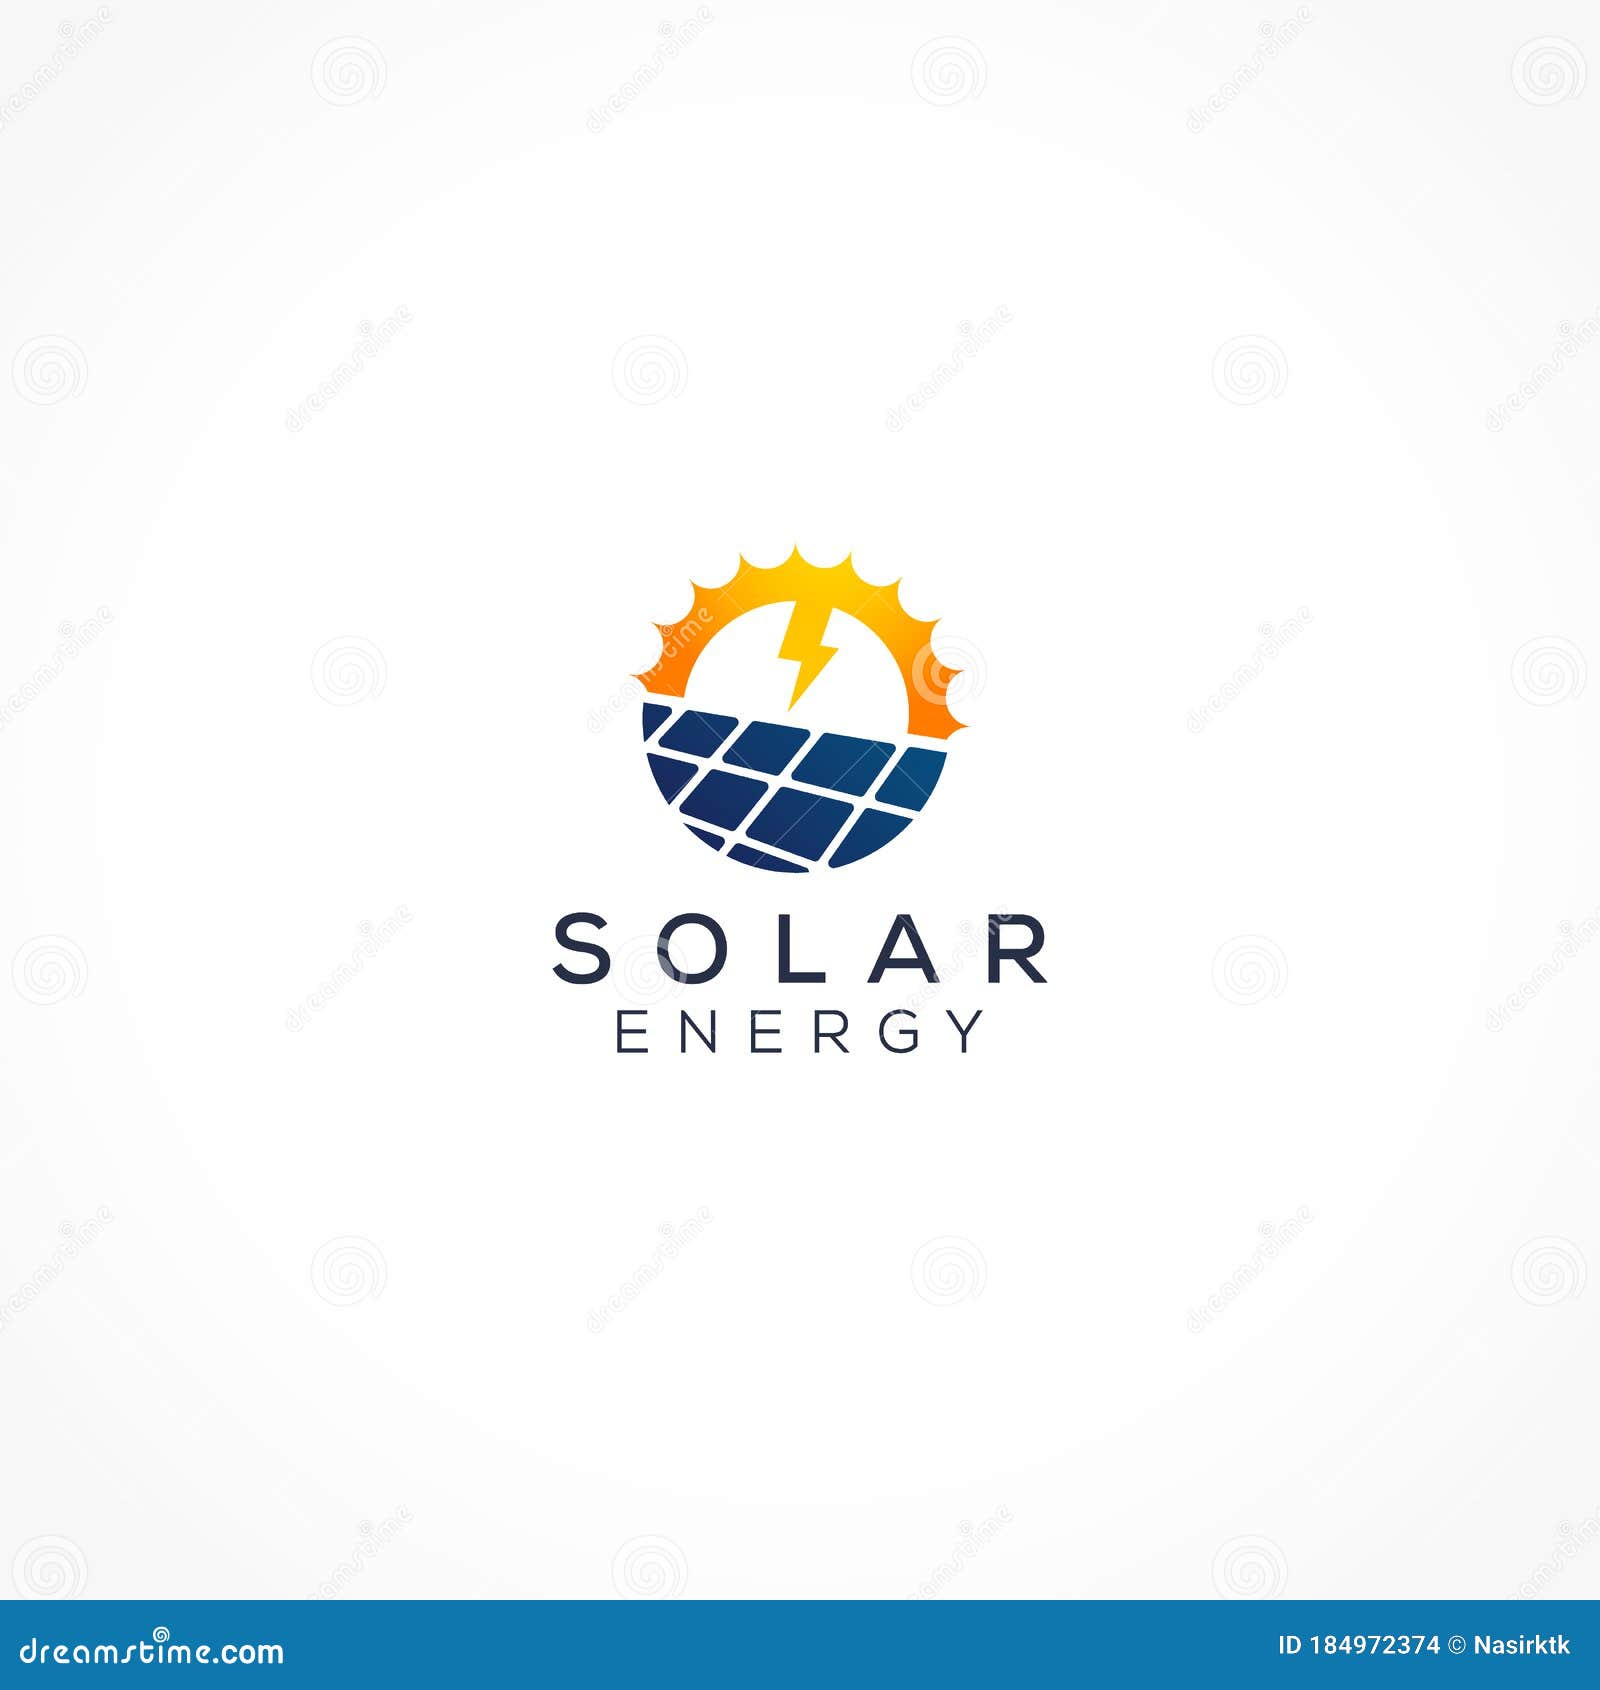 solar penal energy logo template